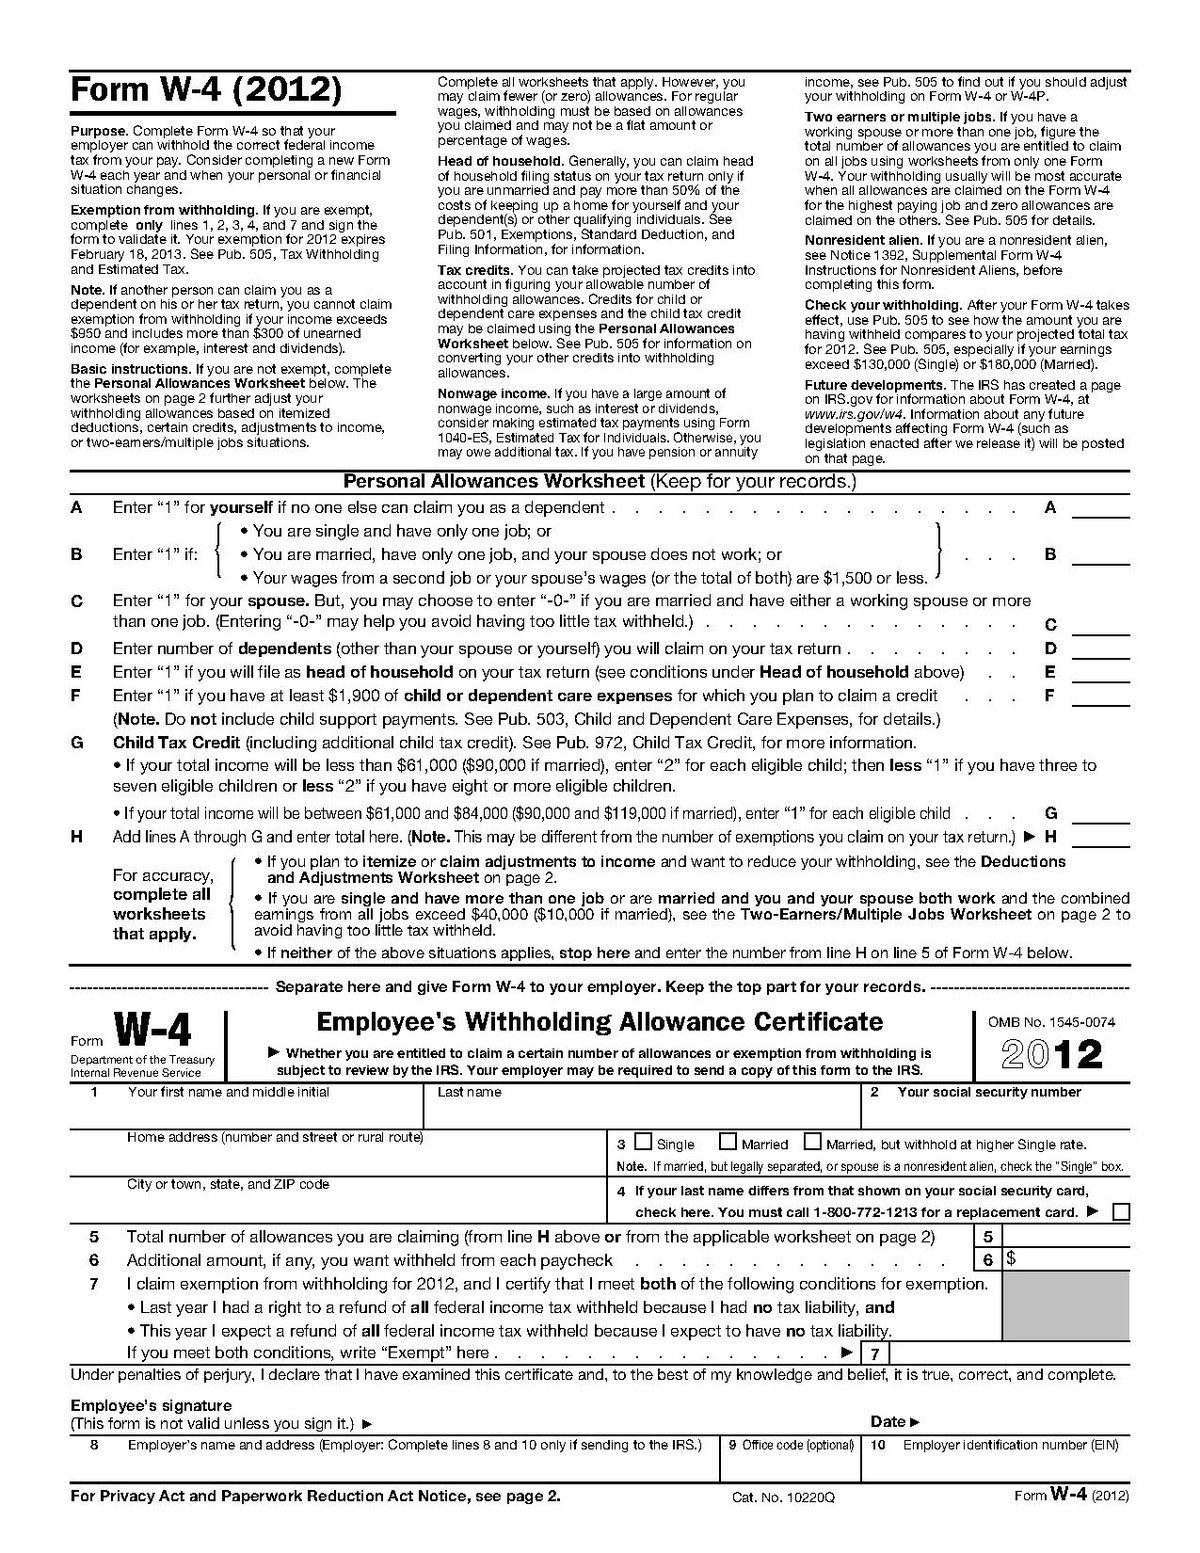 W-9 Form 2021 Printable Pdf | Calendar Template Printable-Form W-9 2021 Printable